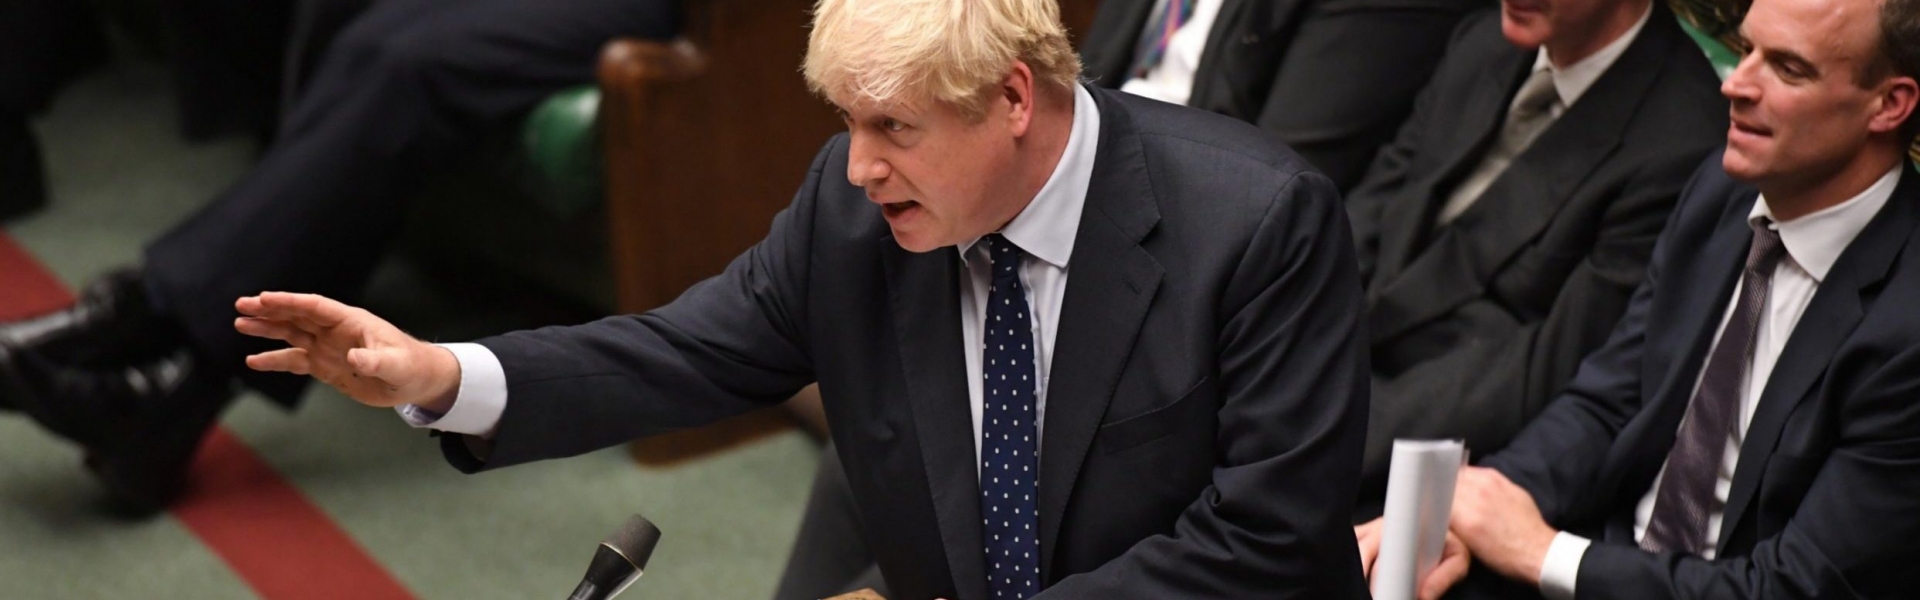 Boris Johnson at the Despatch Box